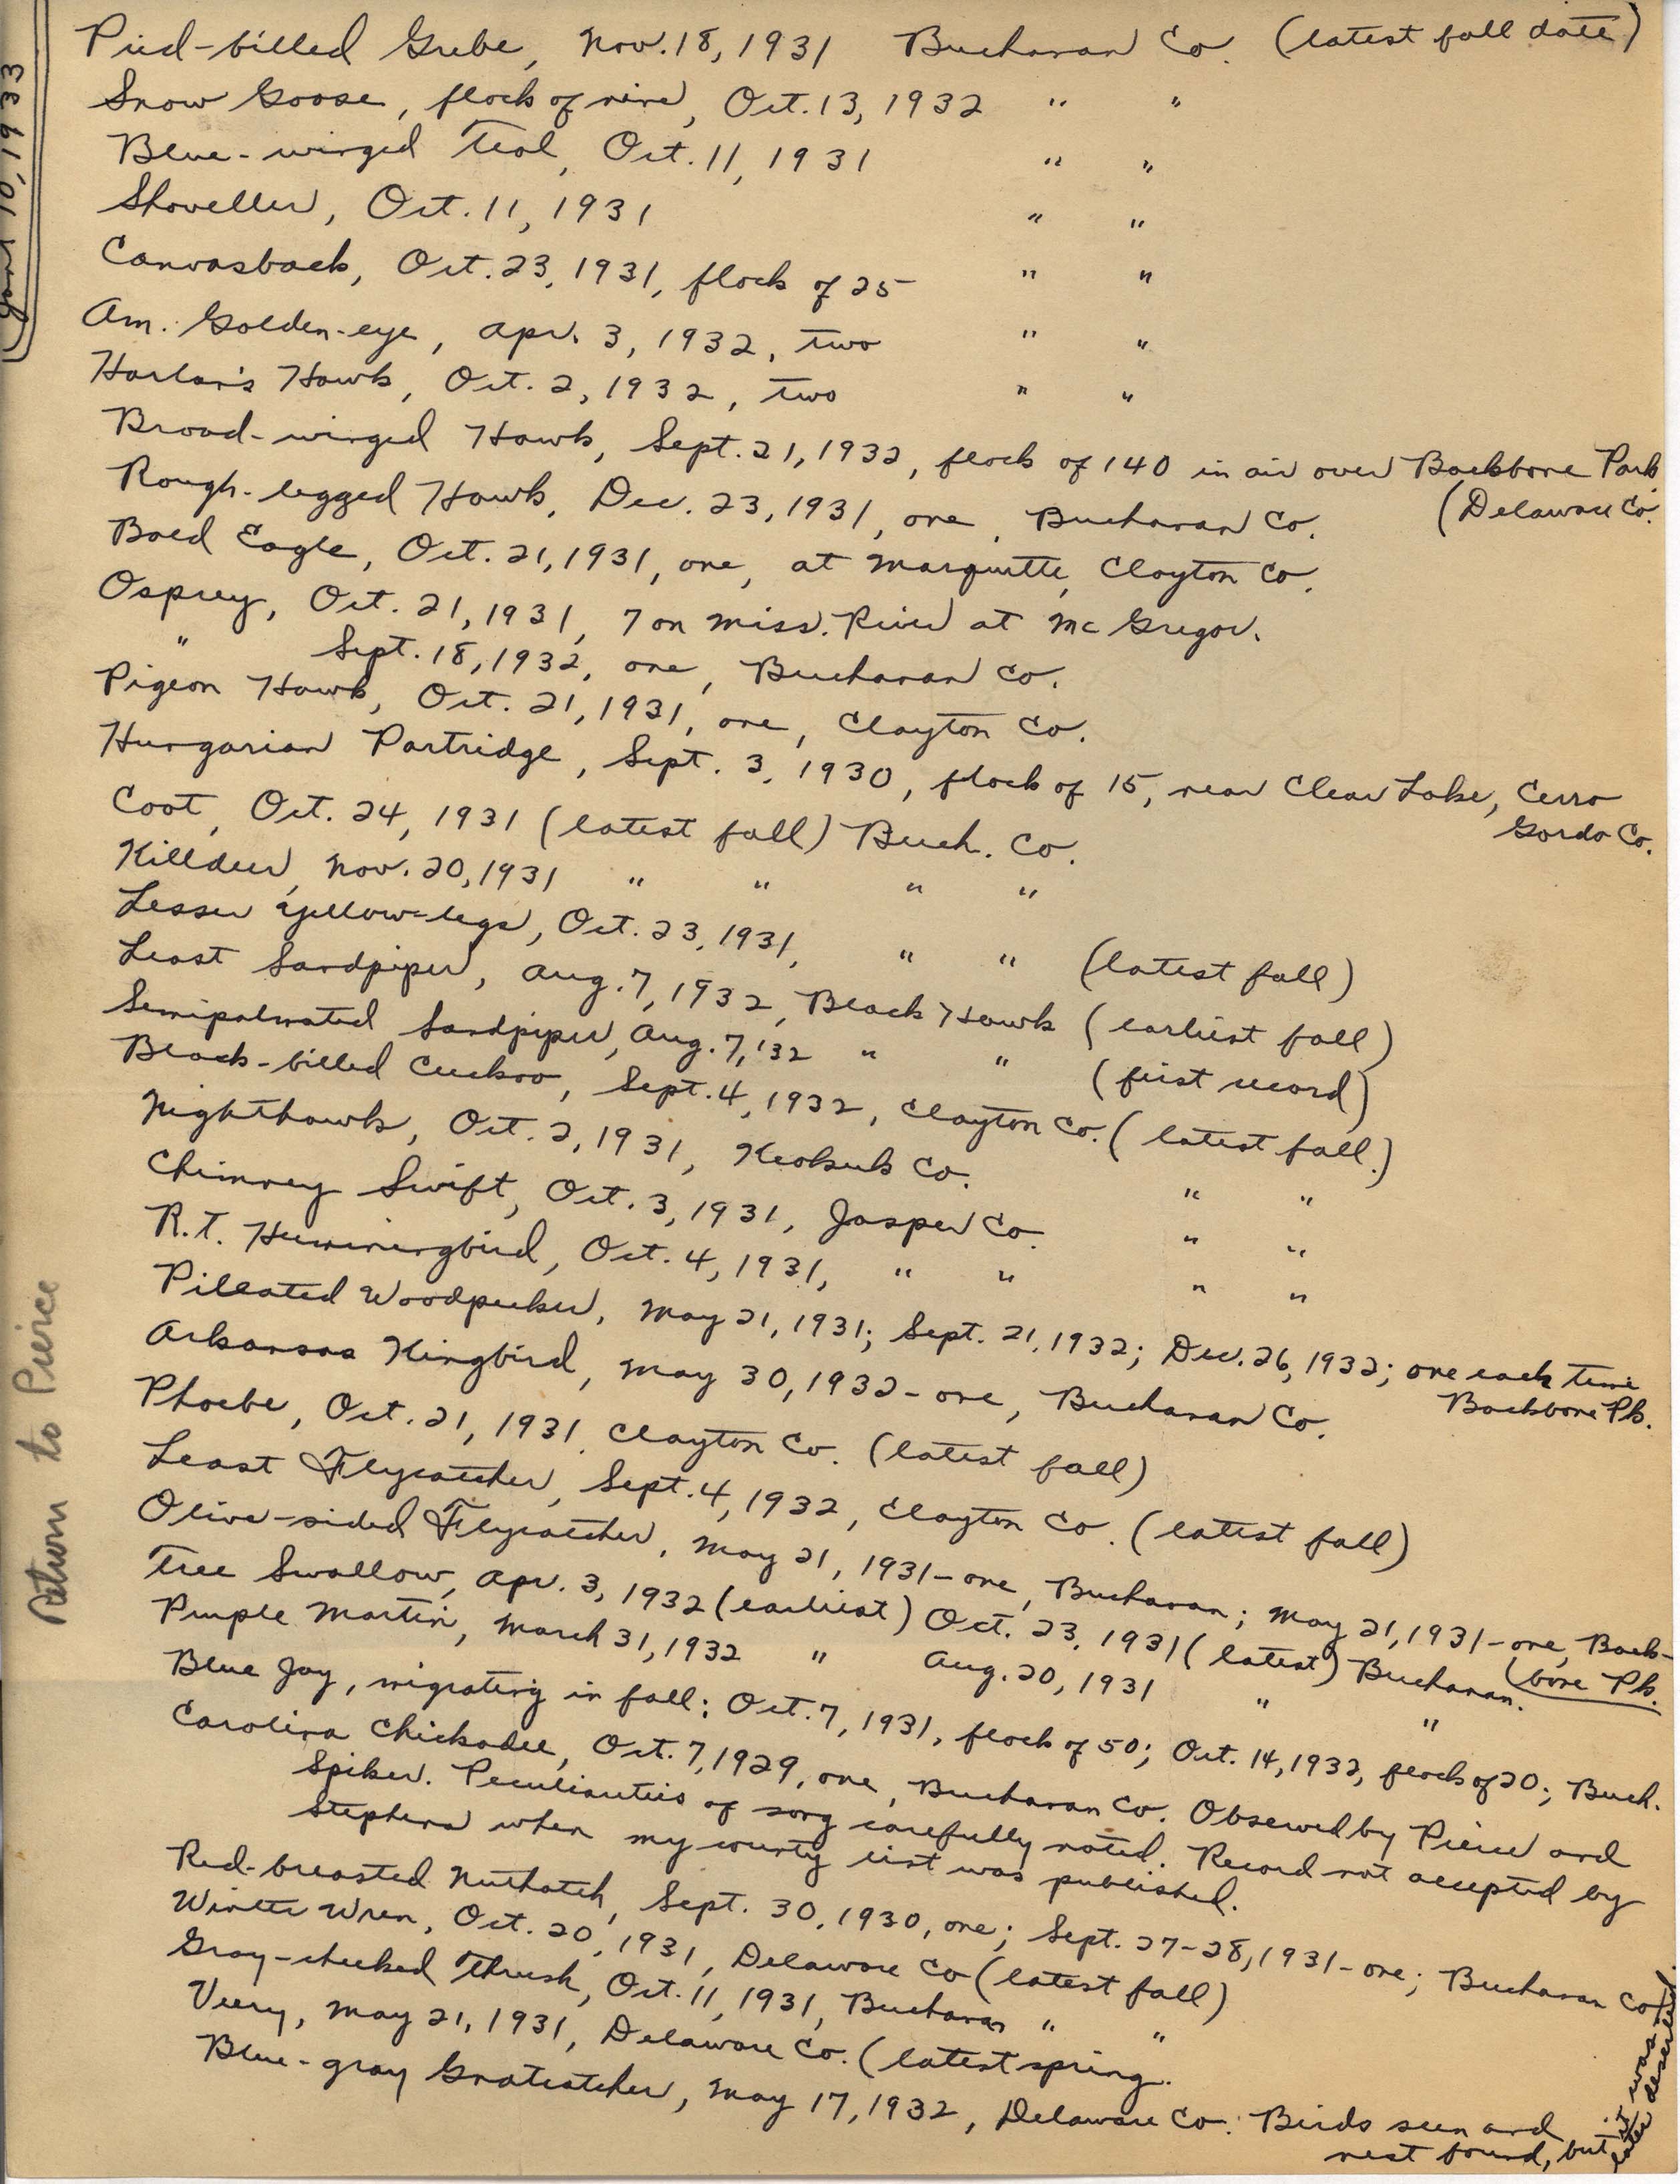 Bird sighting list, January 10, 1933